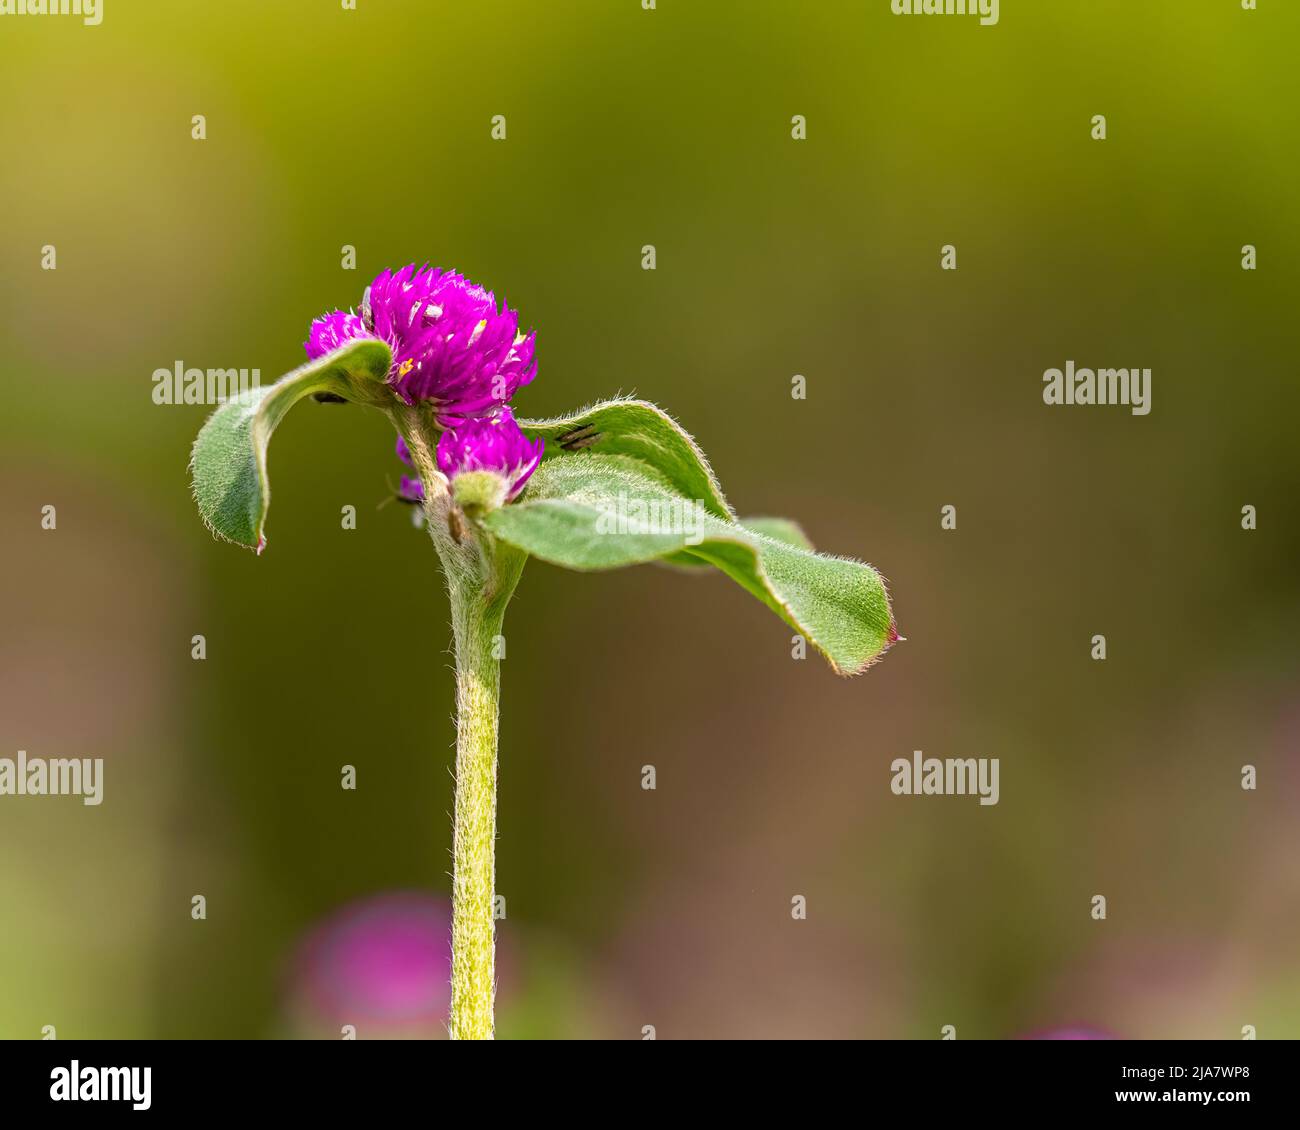 A Gomphrena Globosa flower in garden Stock Photo